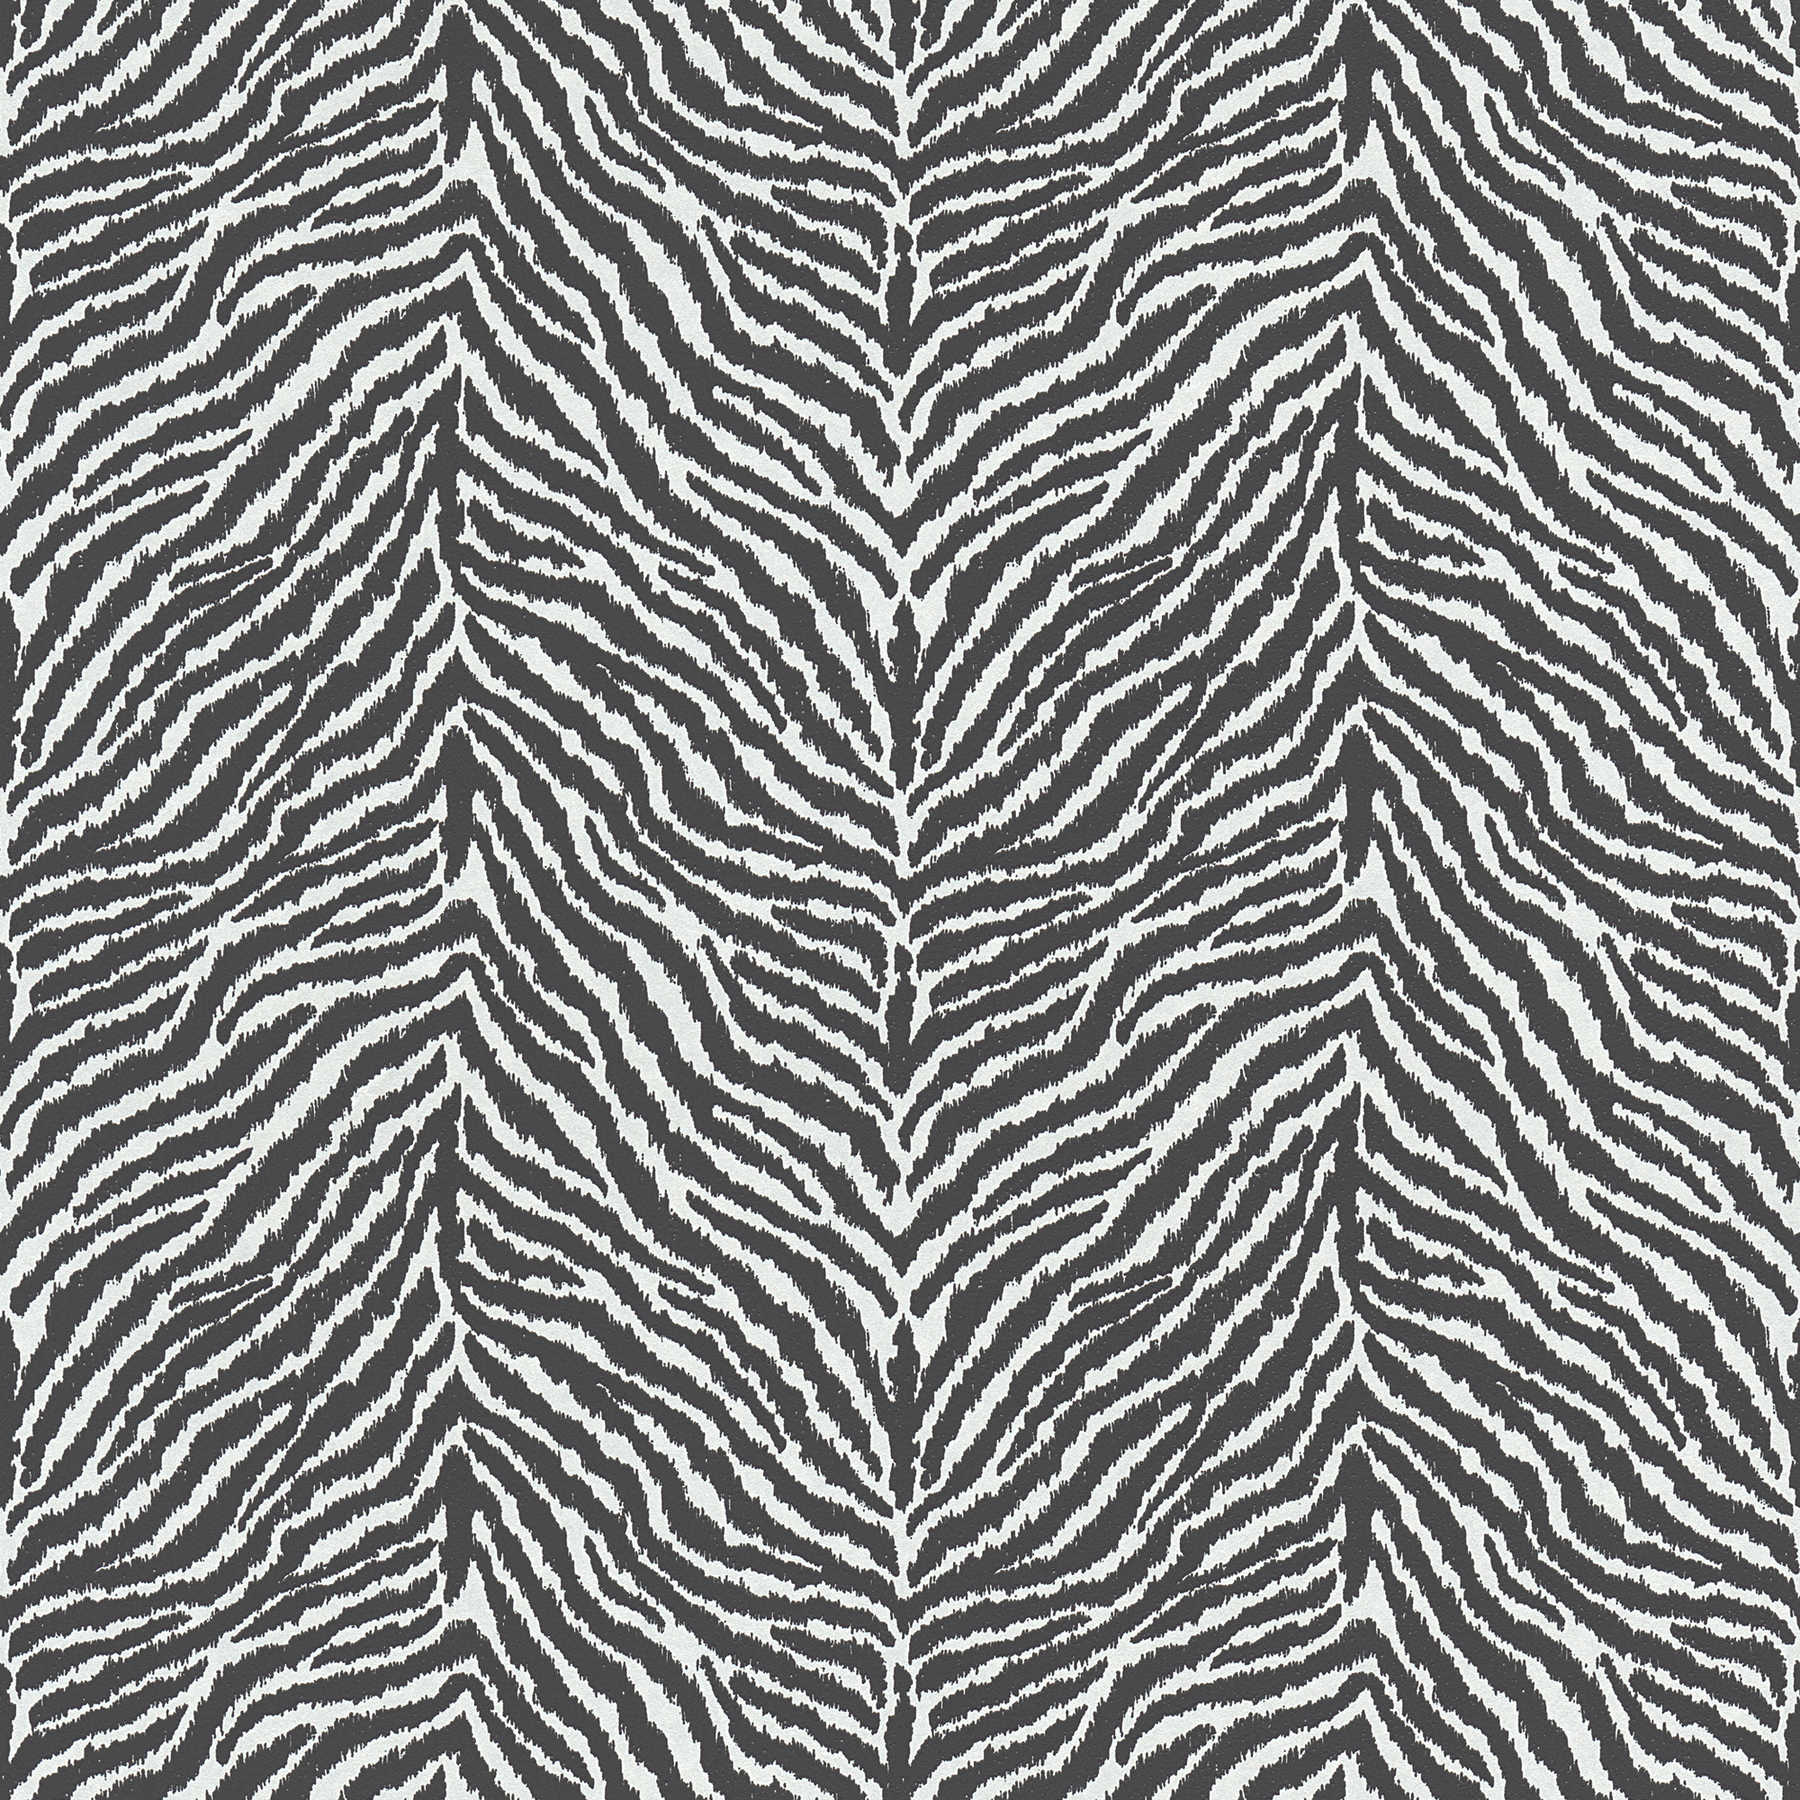         Animal Print Vliestapete Zebra-Muster – Schwarz, Weiß
    